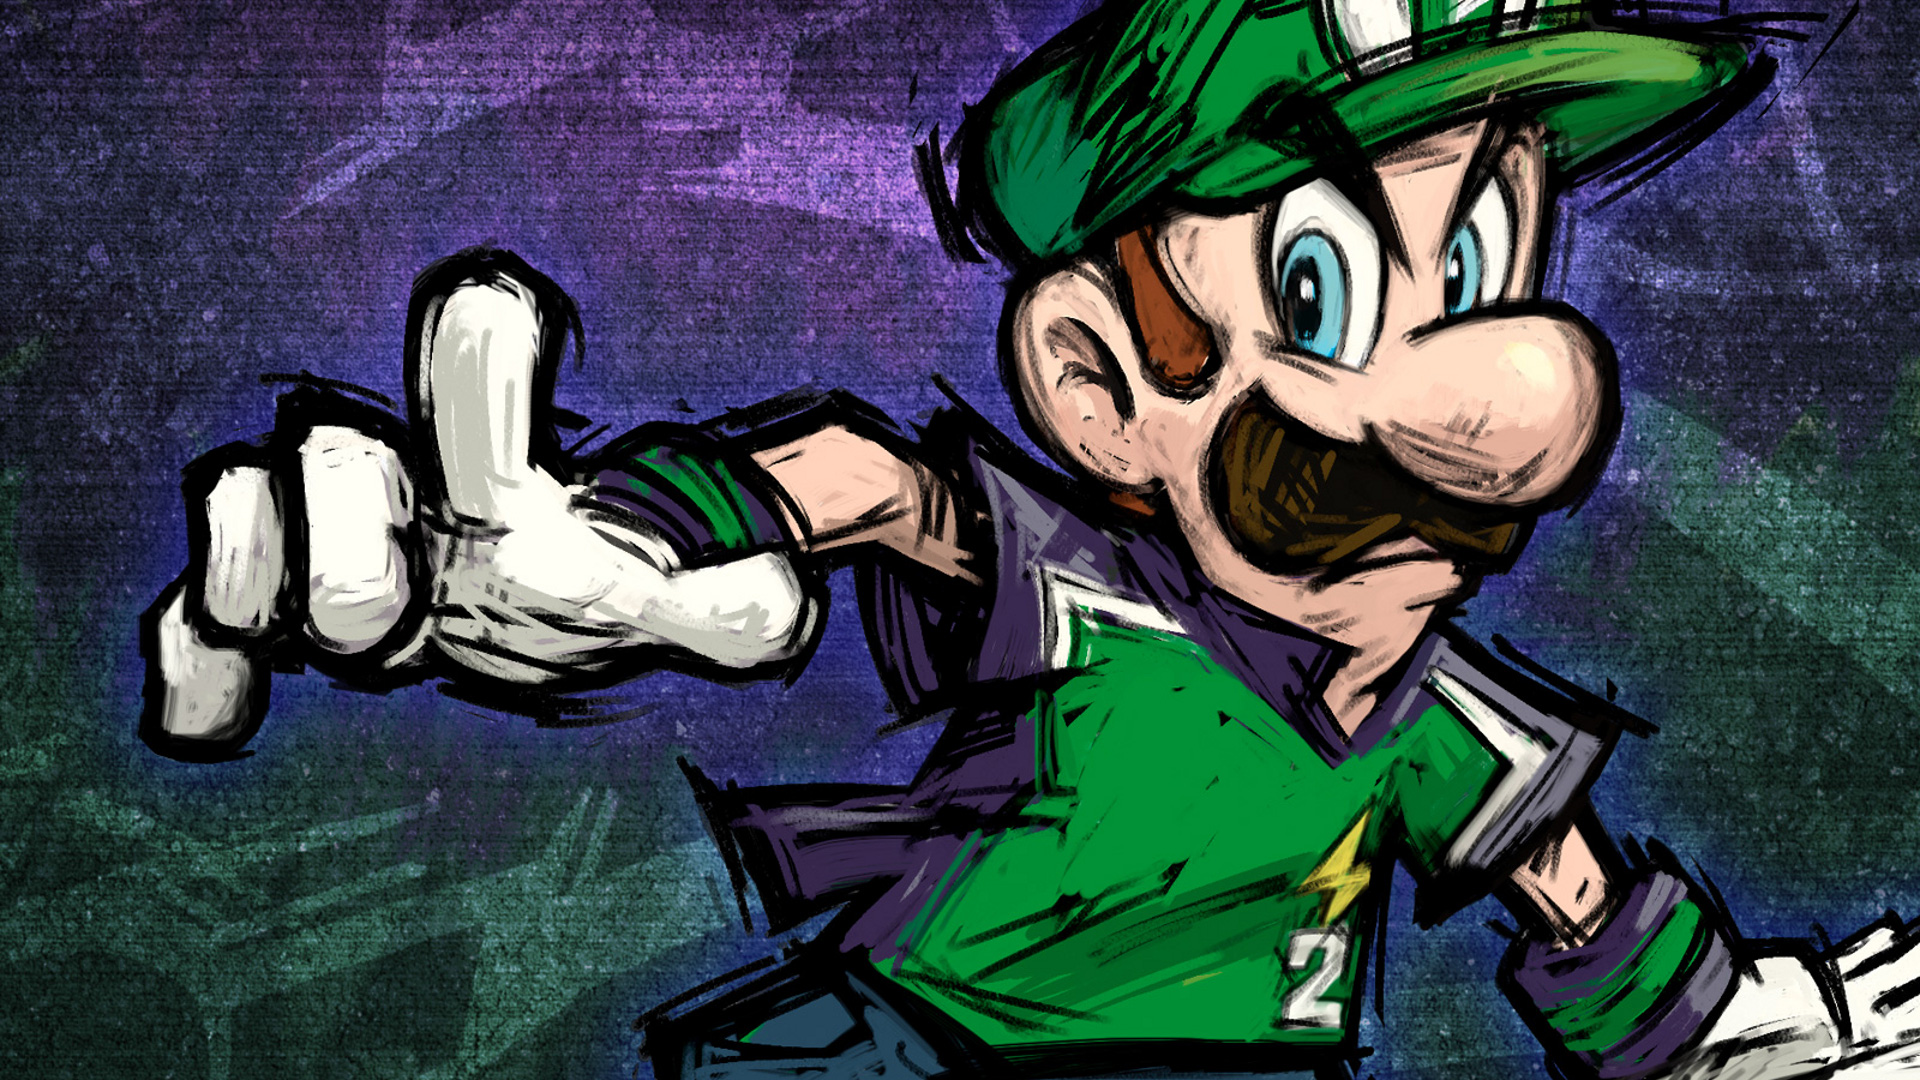 Luigi Wallpapers